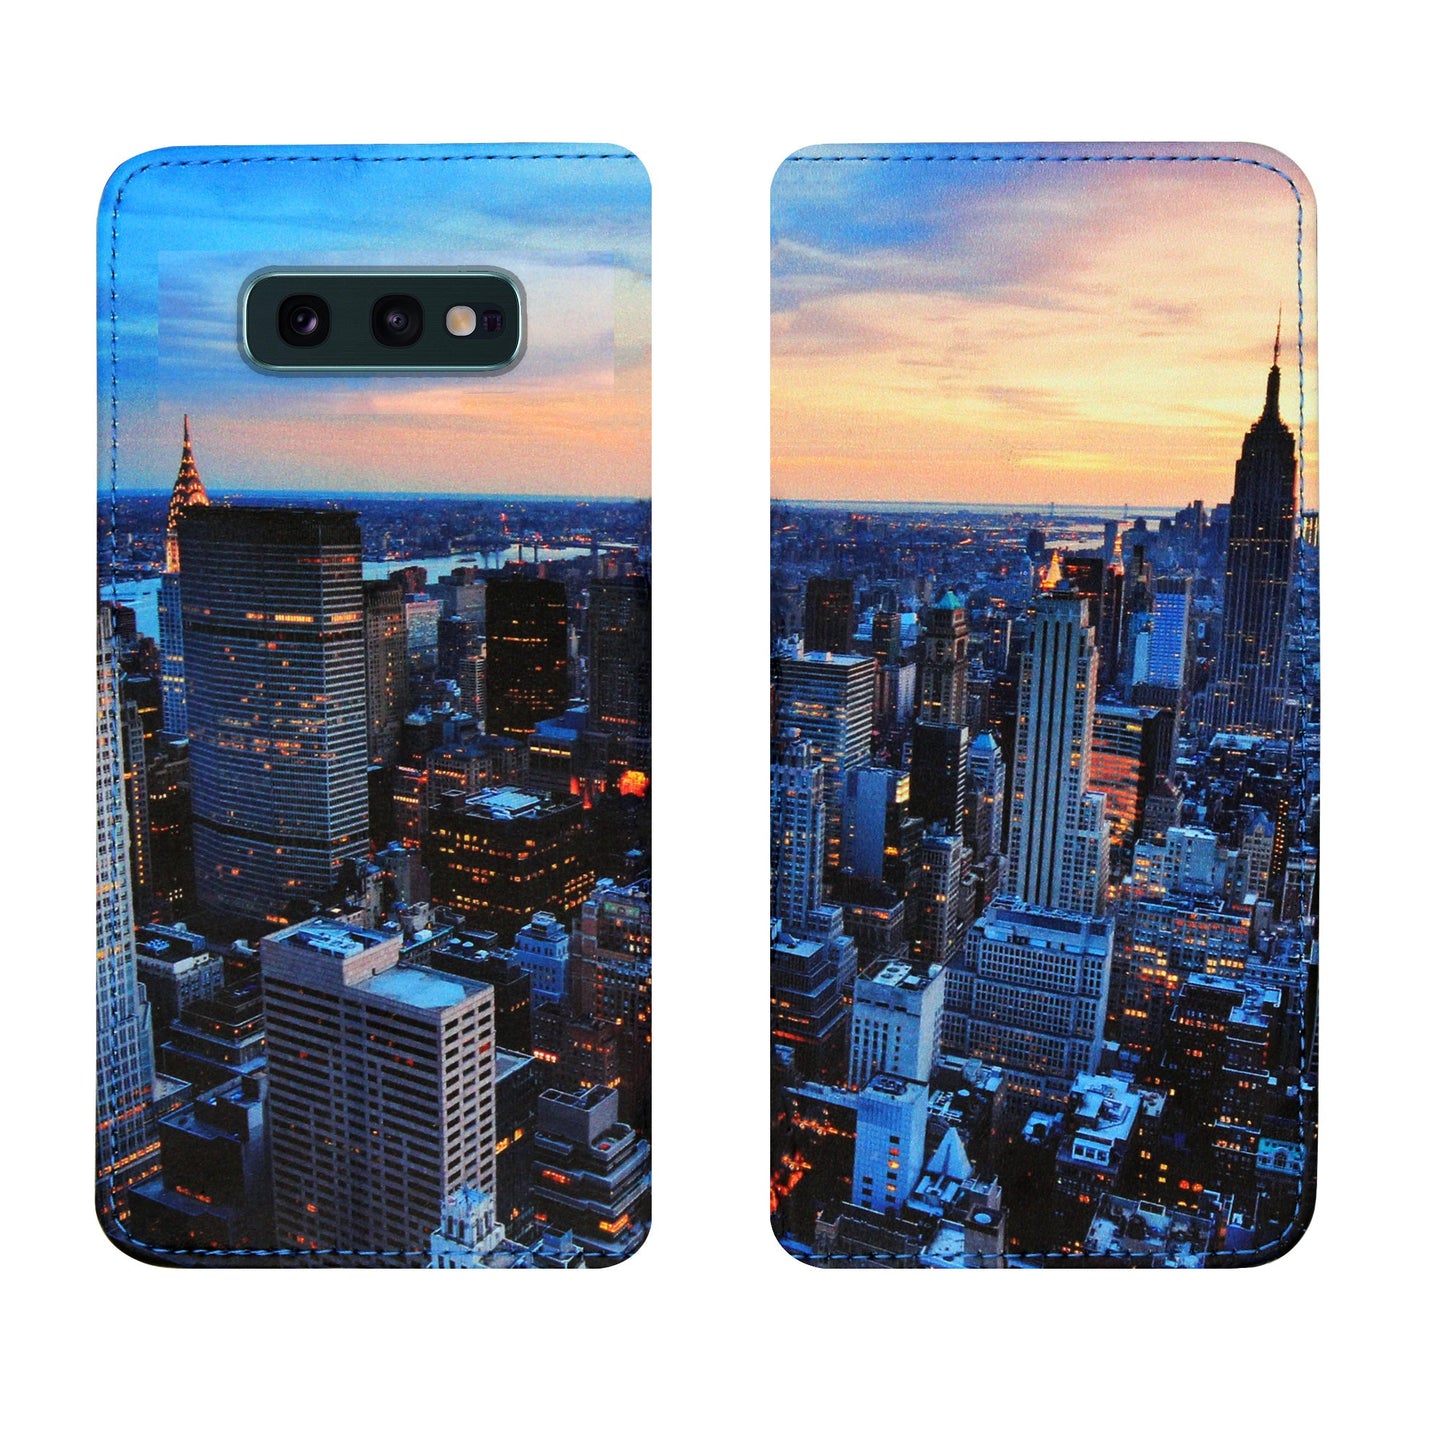 Coque New York City Panorama pour iPhone et Samsung